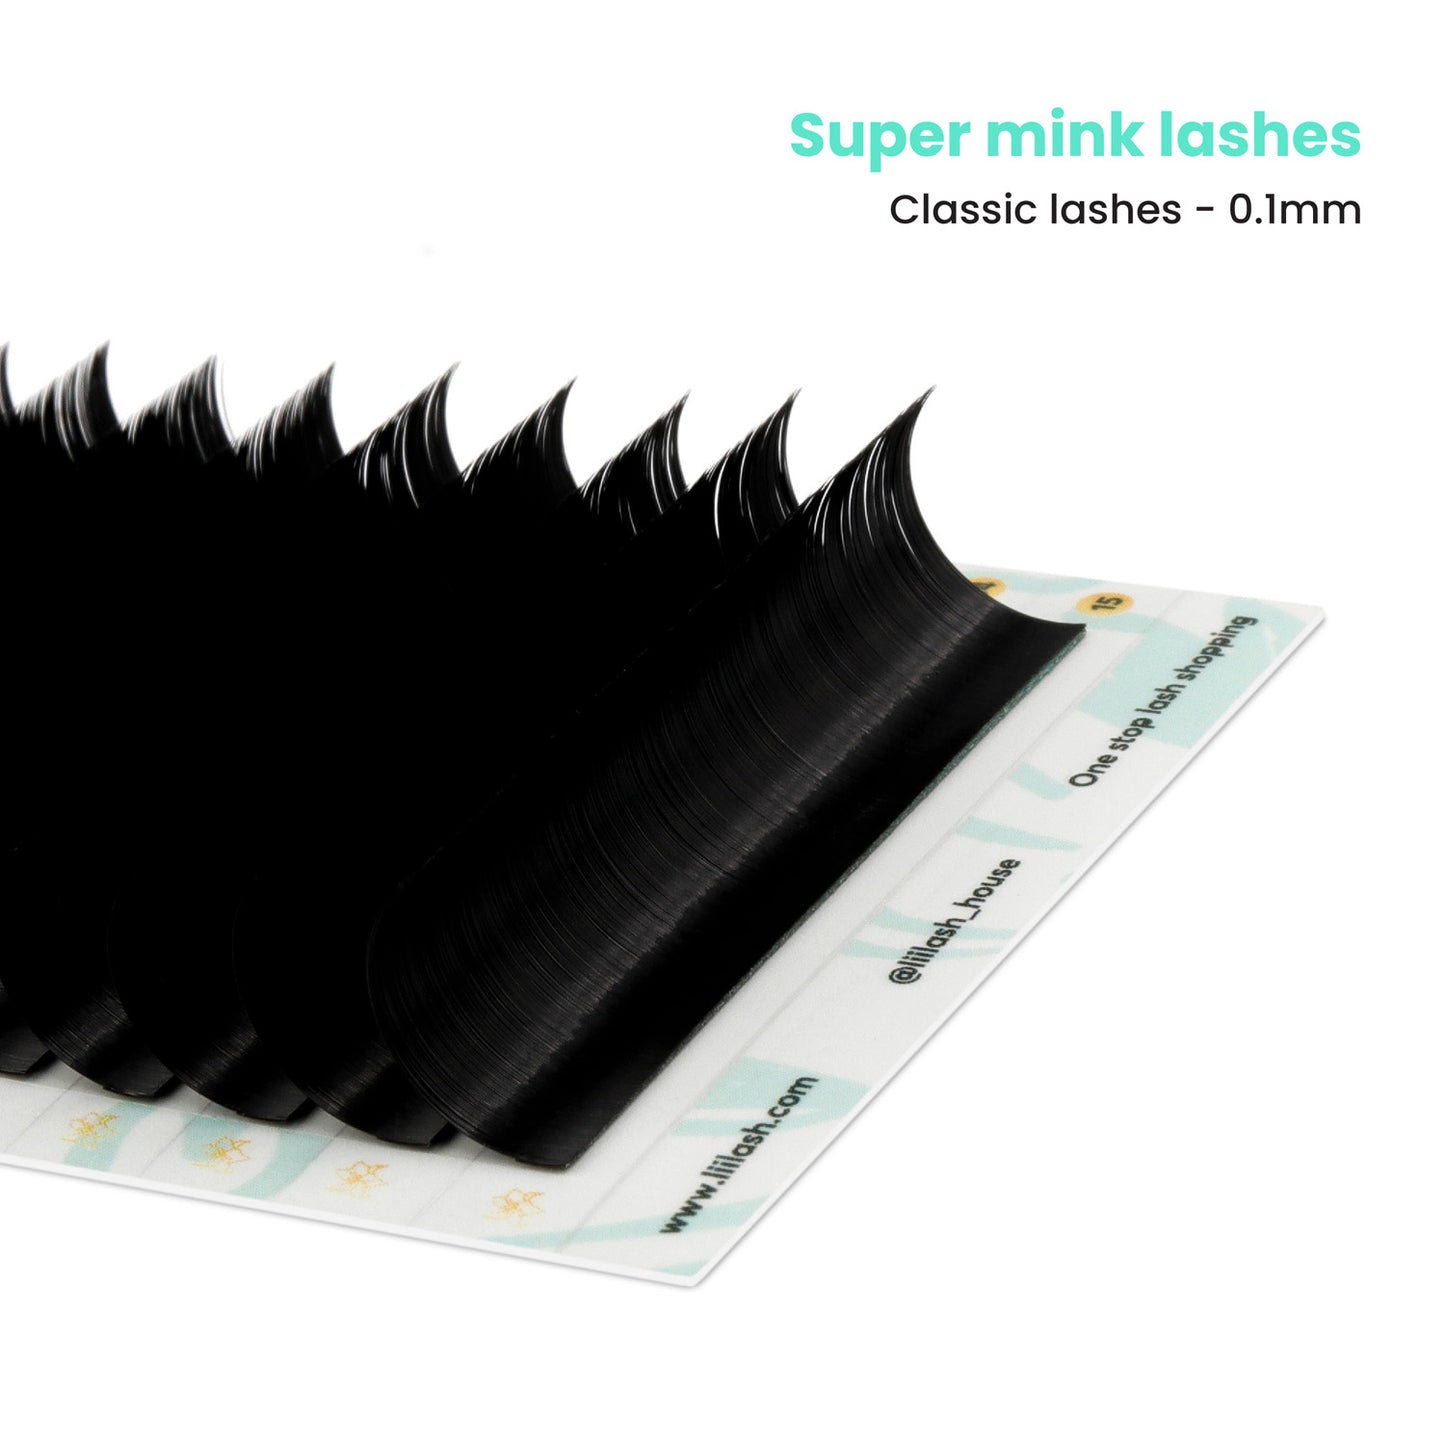 Super-Mink-classic-lashes-0.1mm